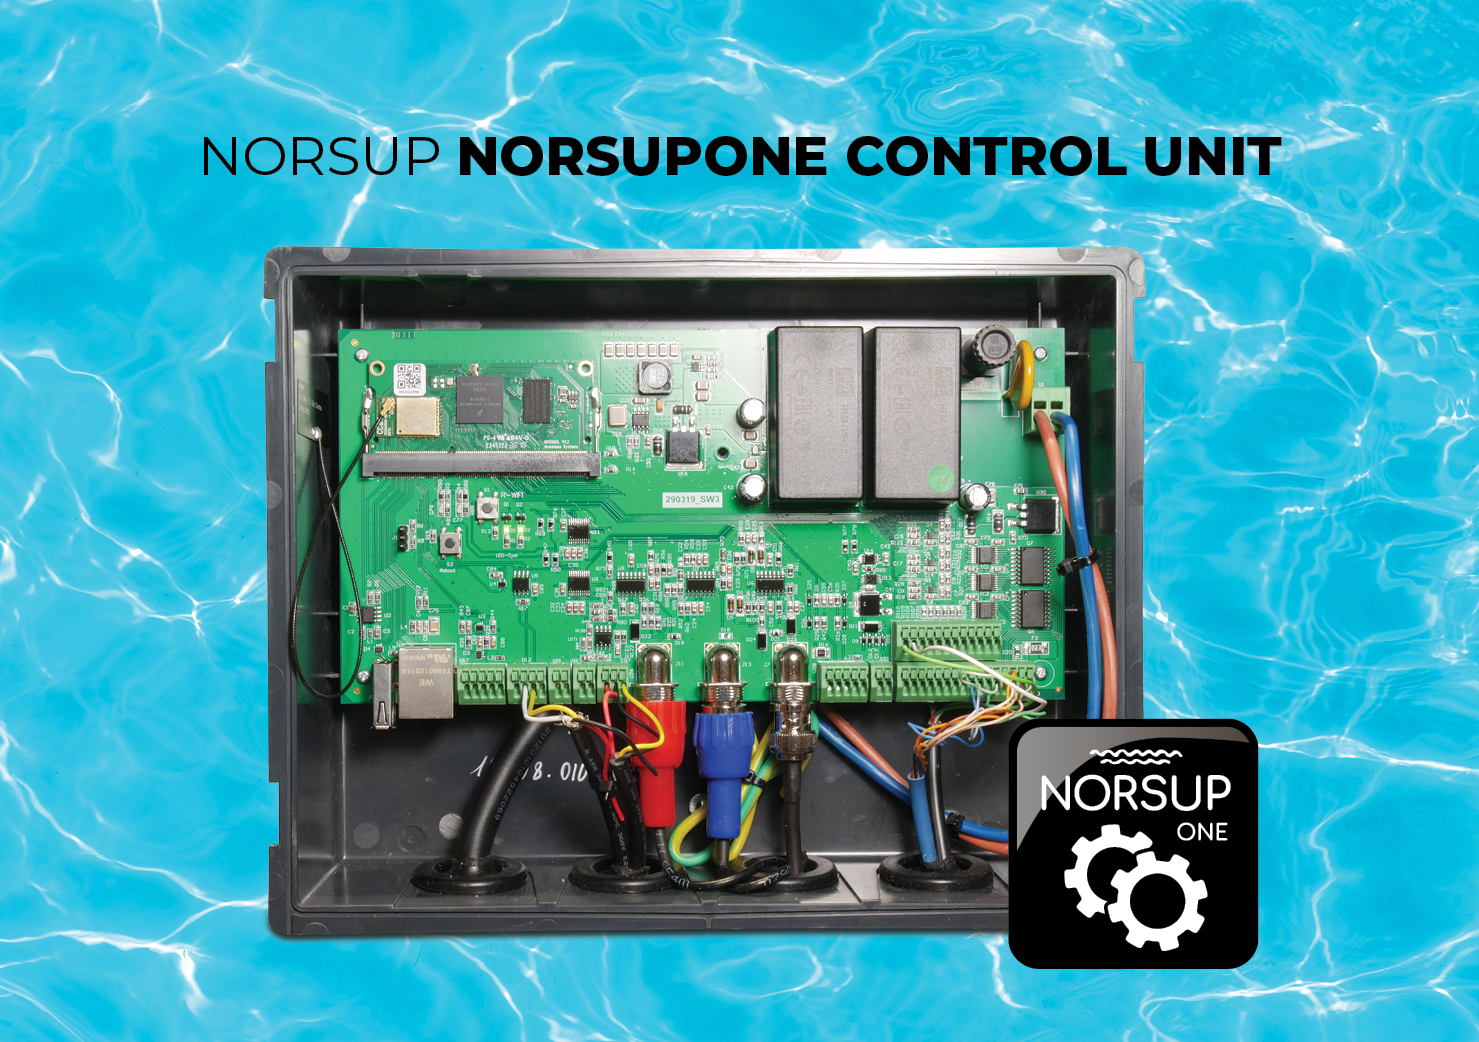 NorsupOne control unit